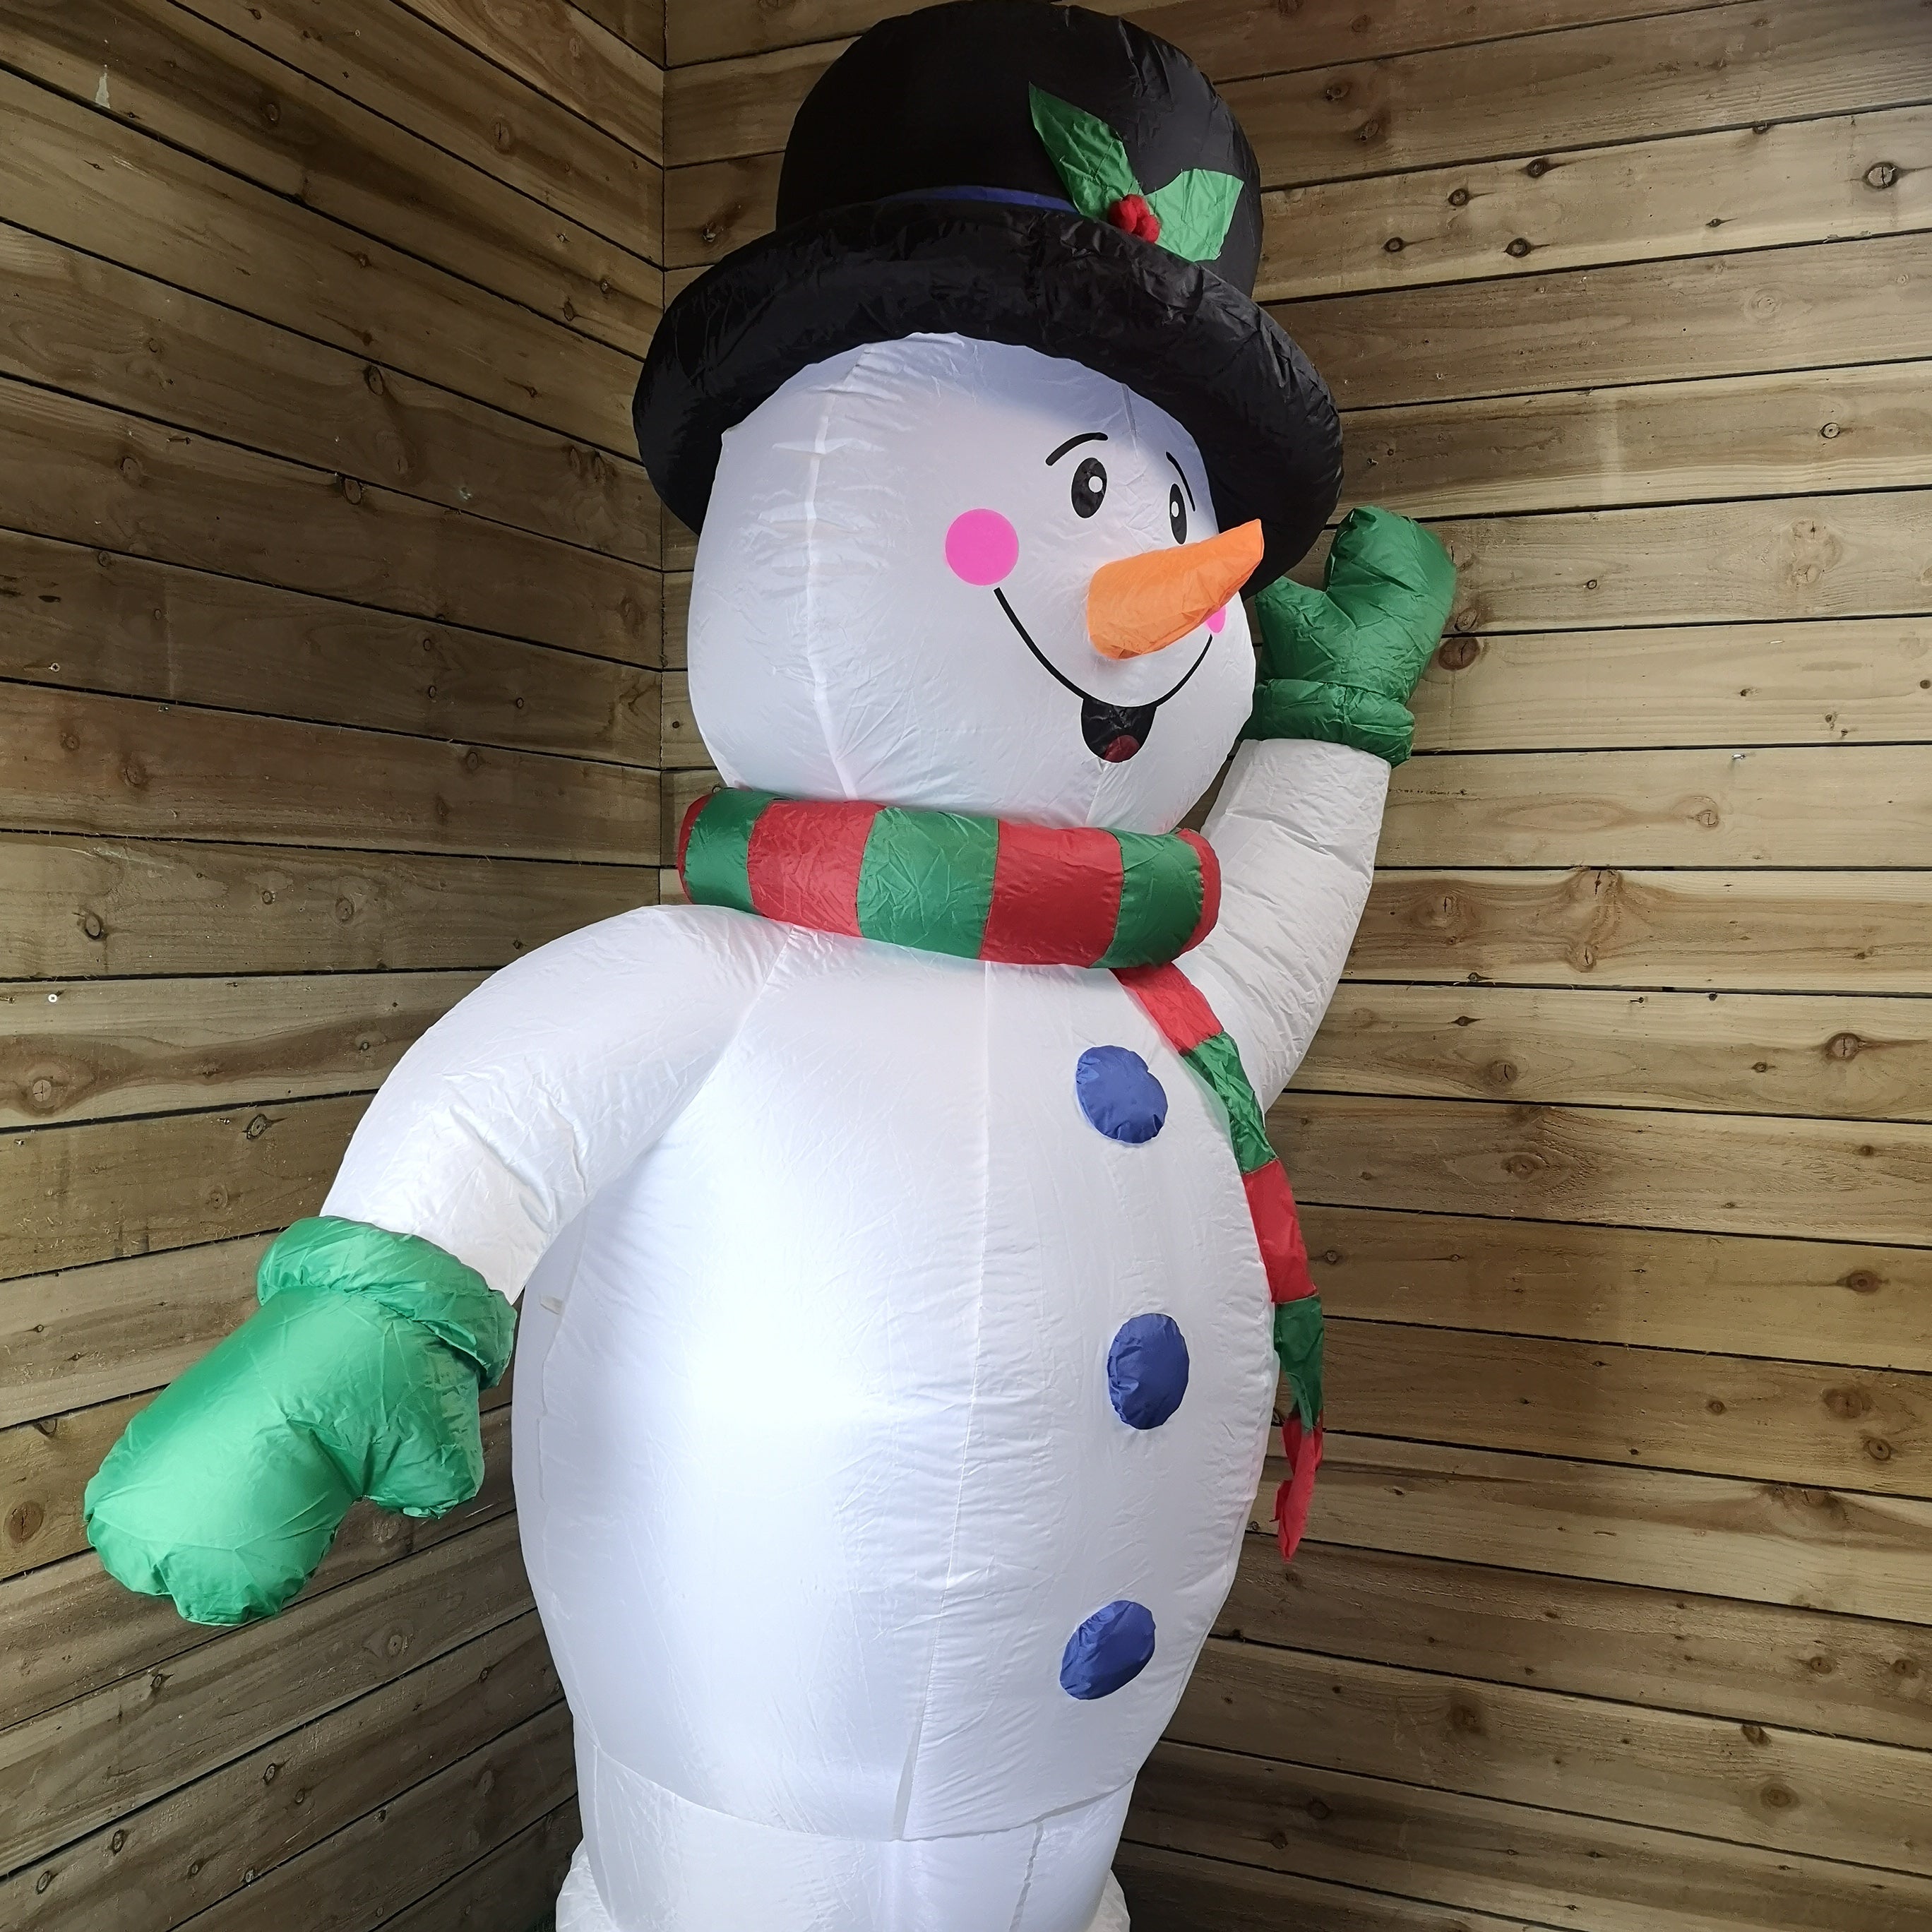 Premier 2.4M Indoor And Outdoor Inflatable Lit Snowman